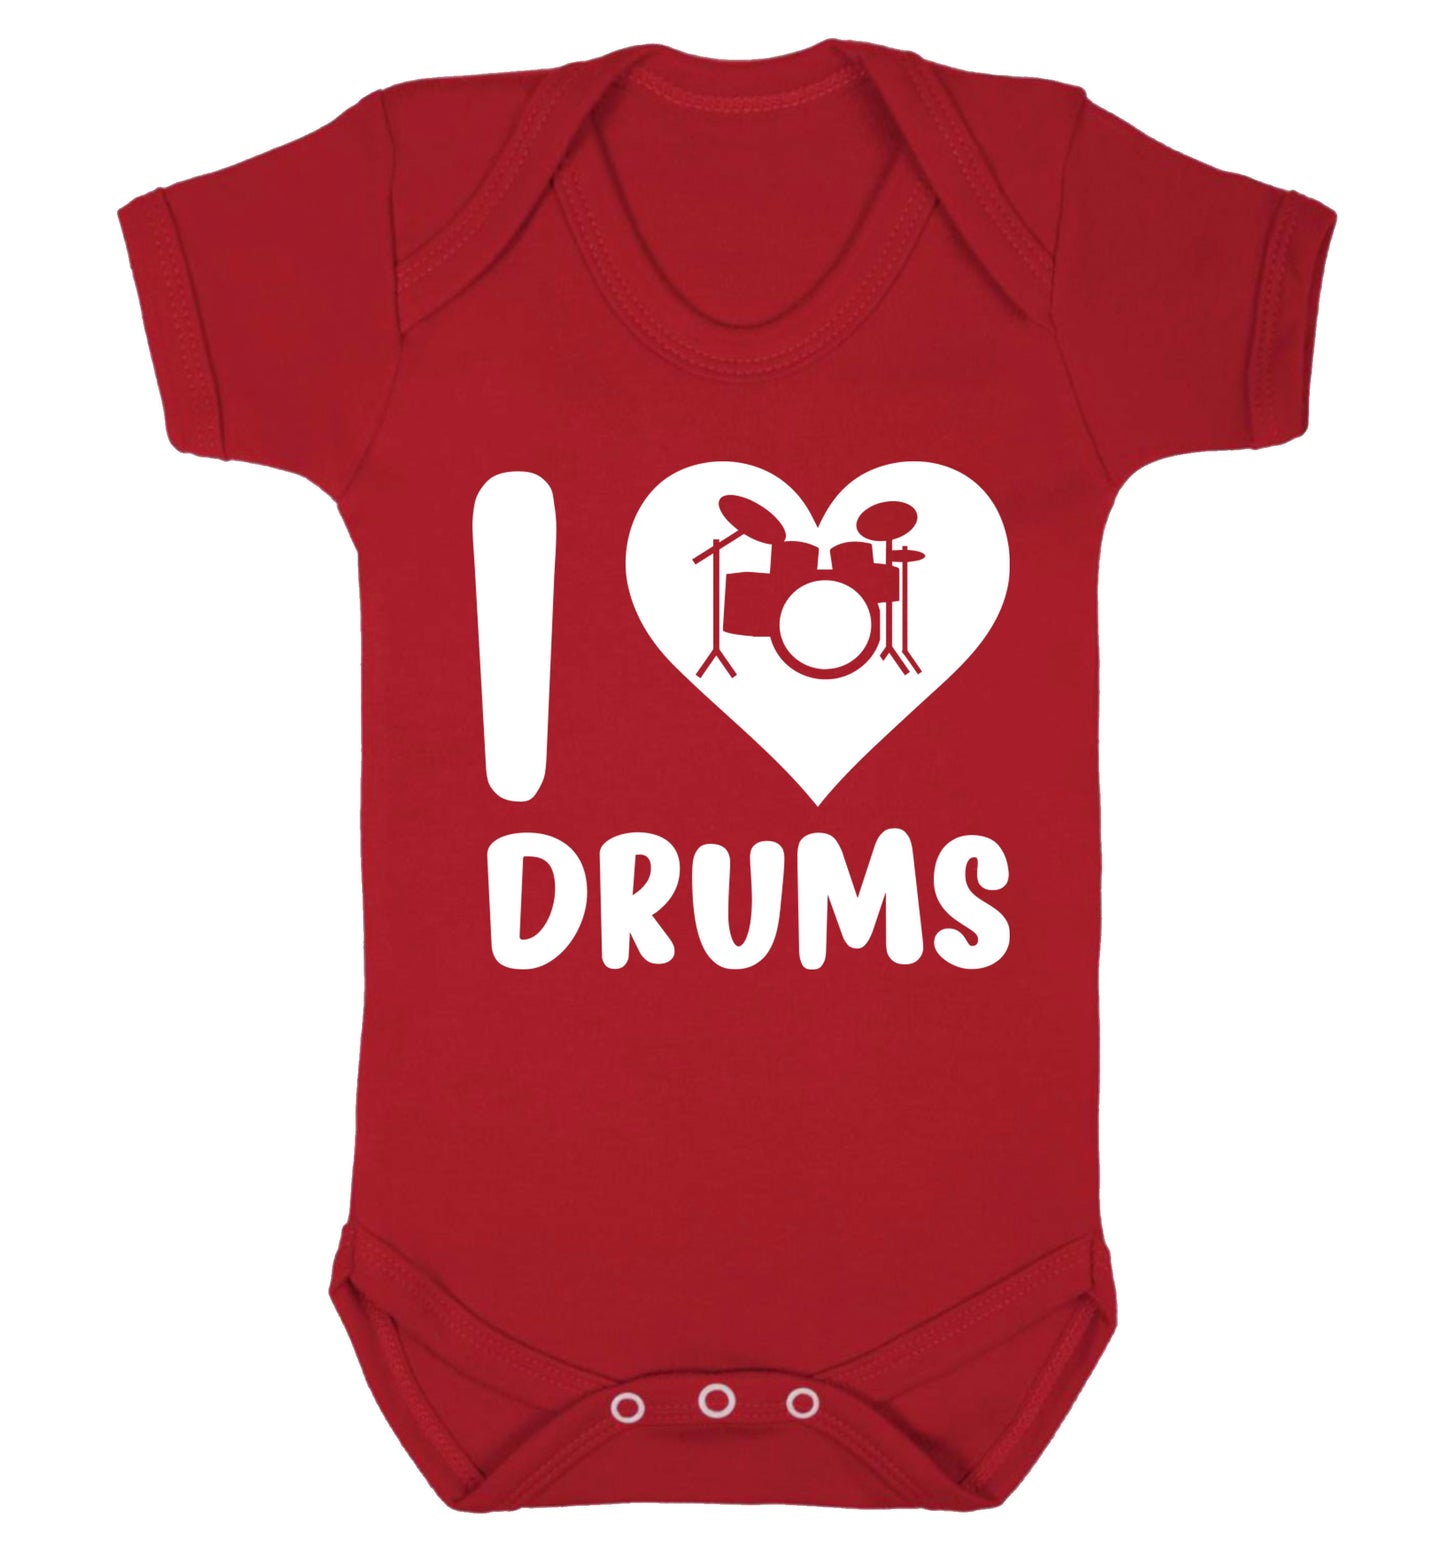 I love drums Baby Vest red 18-24 months